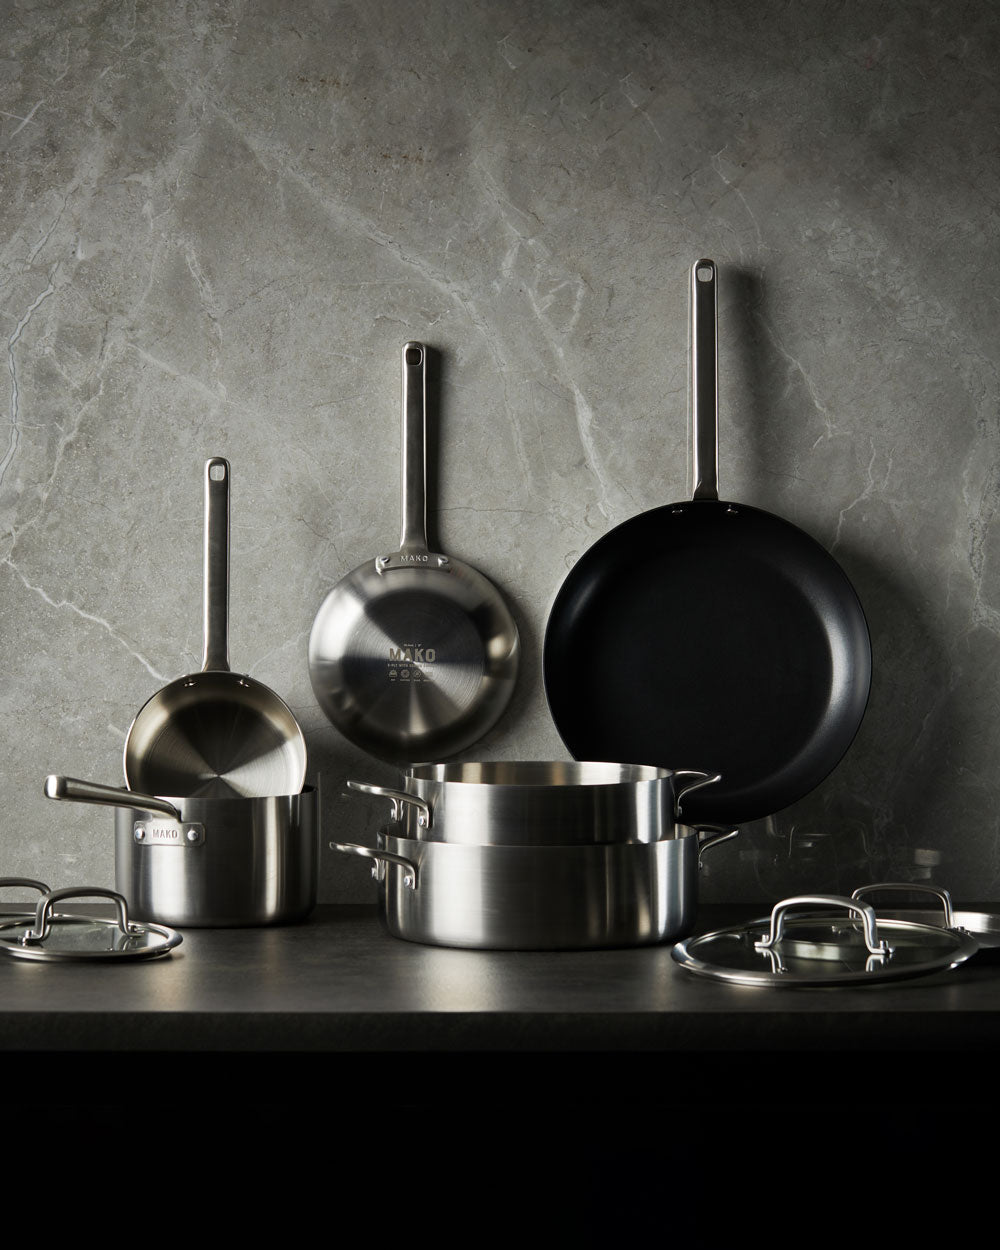 MAKO Genius 5-Ply Non-Stick Frying Pan Set (2-piece) – CookDineHost